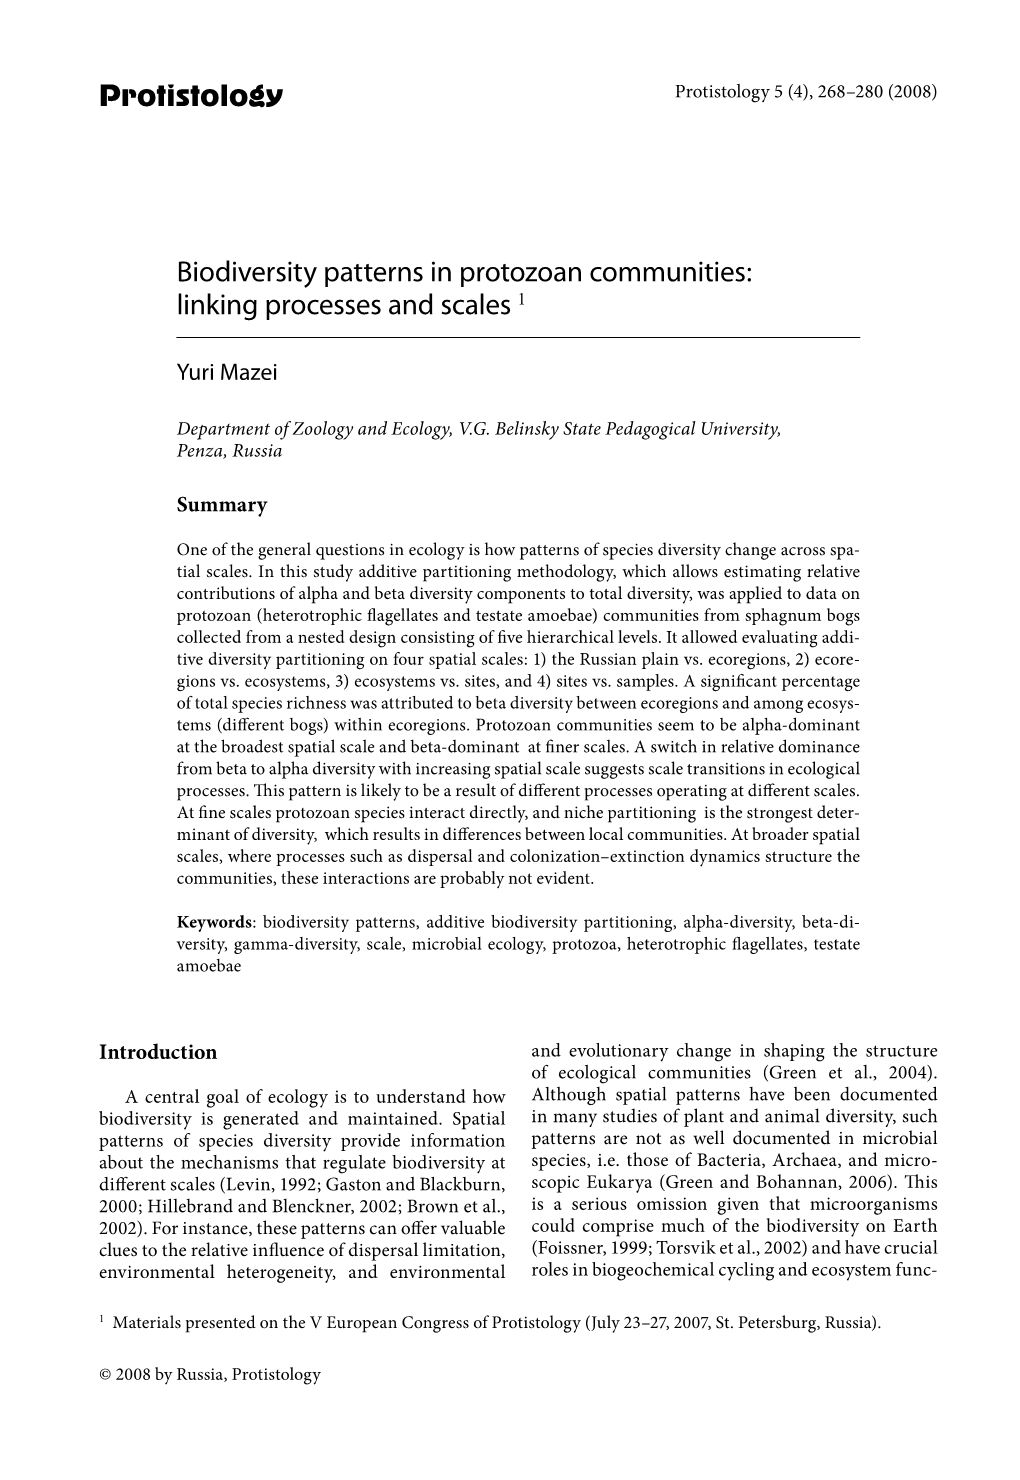 Protistology Biodiversity Patterns in Protozoan Communities: Linking